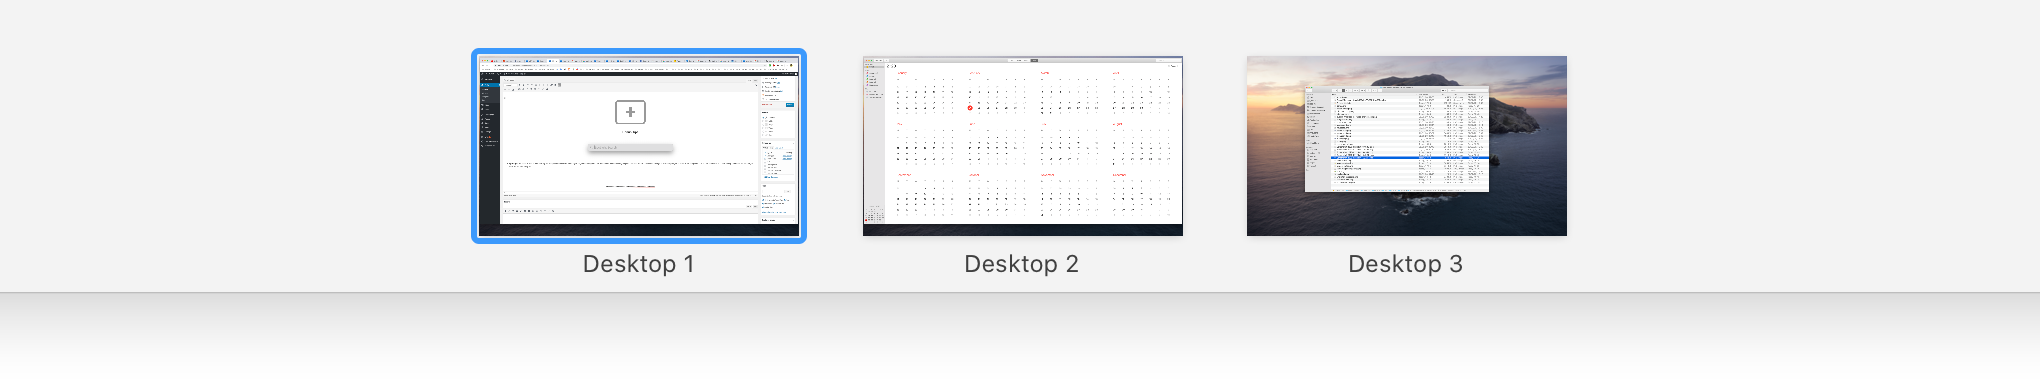 macOS Spaces (Desktops)